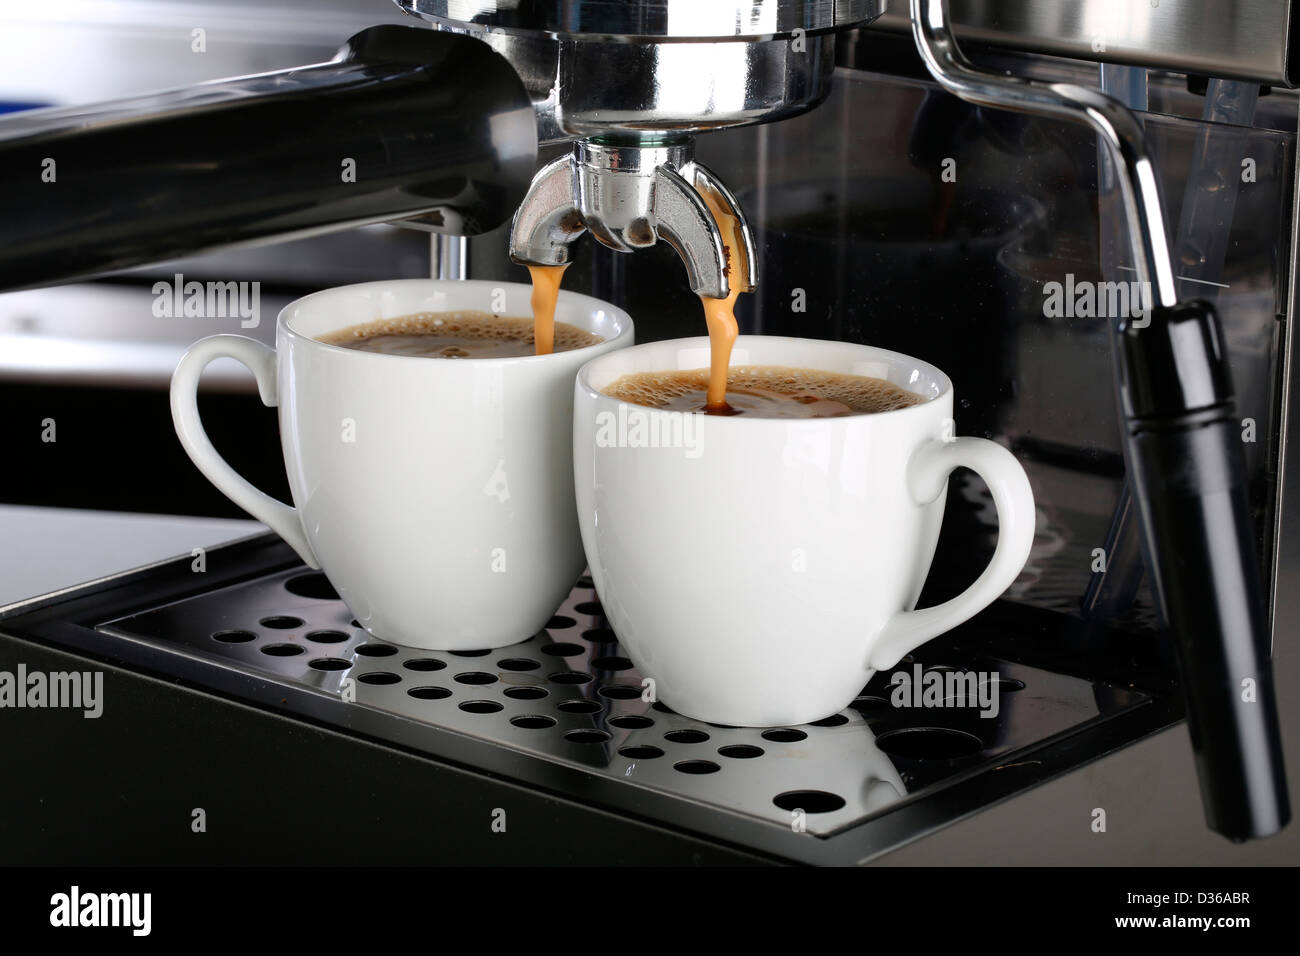 https://c8.alamy.com/comp/D36ABR/making-fresh-espresso-coffee-D36ABR.jpg